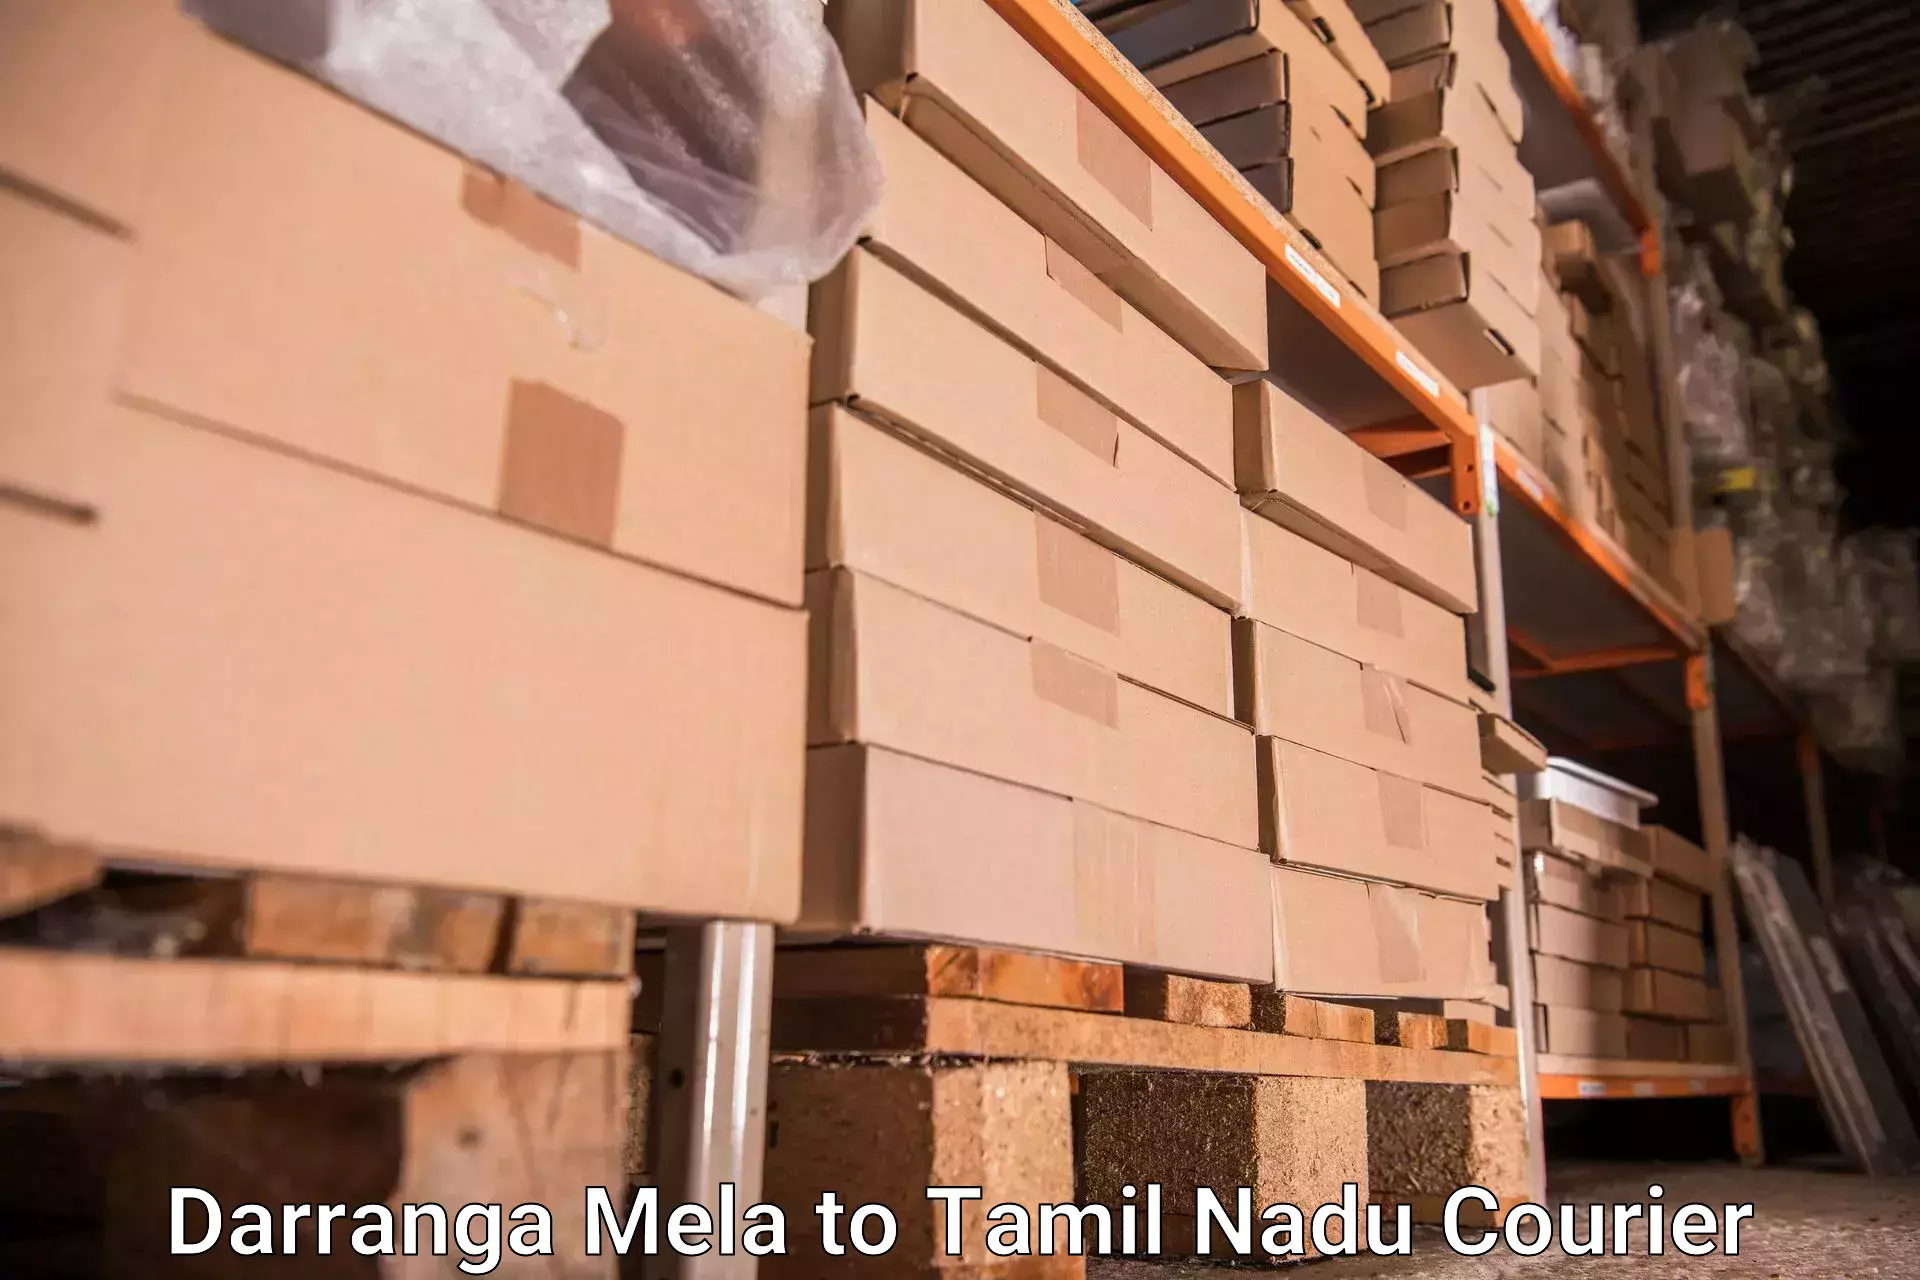 Baggage relocation service Darranga Mela to Tamil Nadu